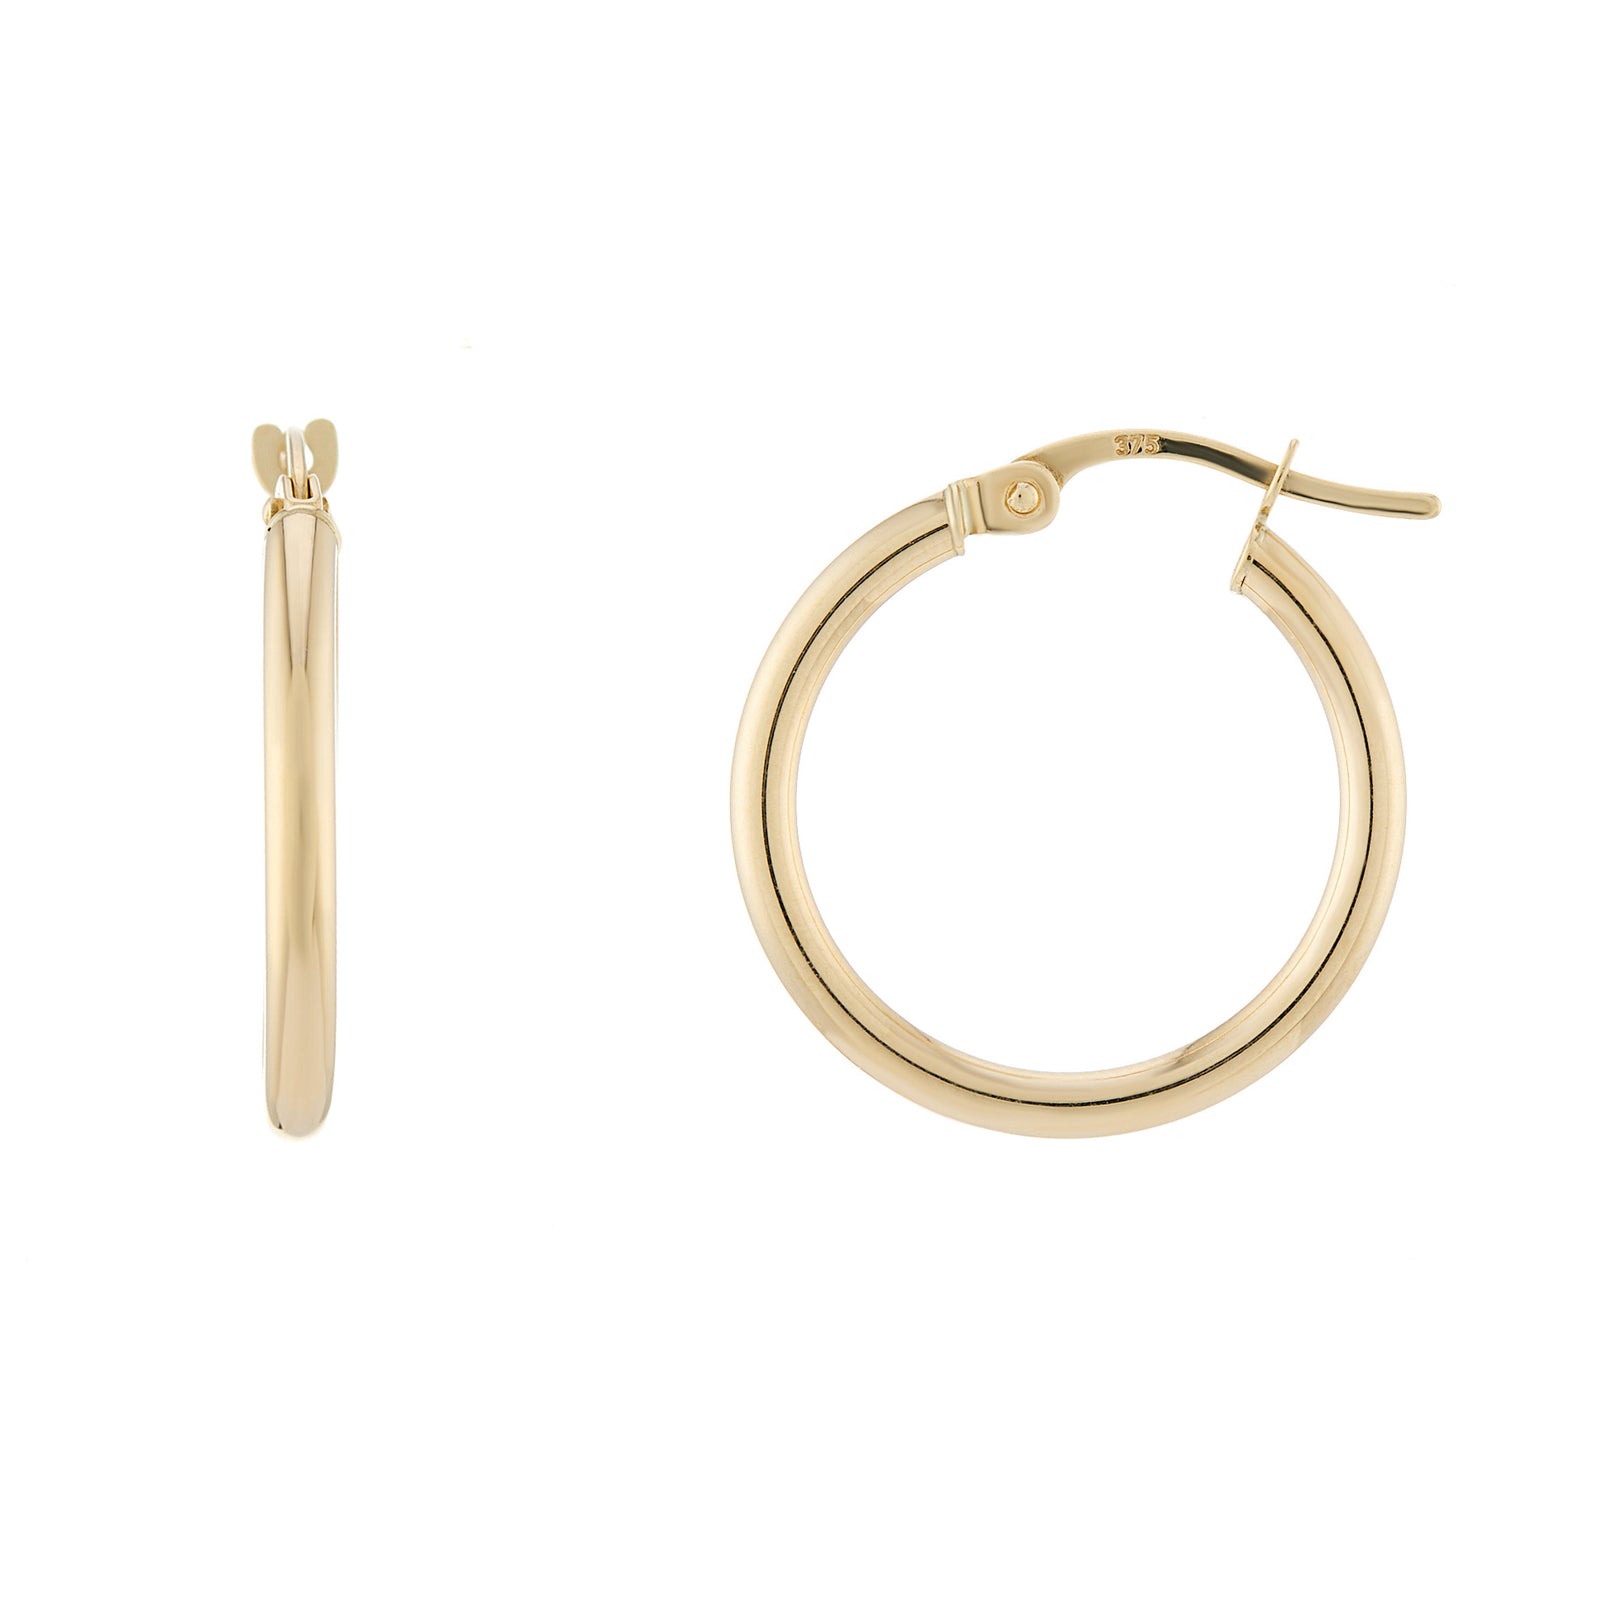 9ct gold plain 2mm x 15mm hoop earrings